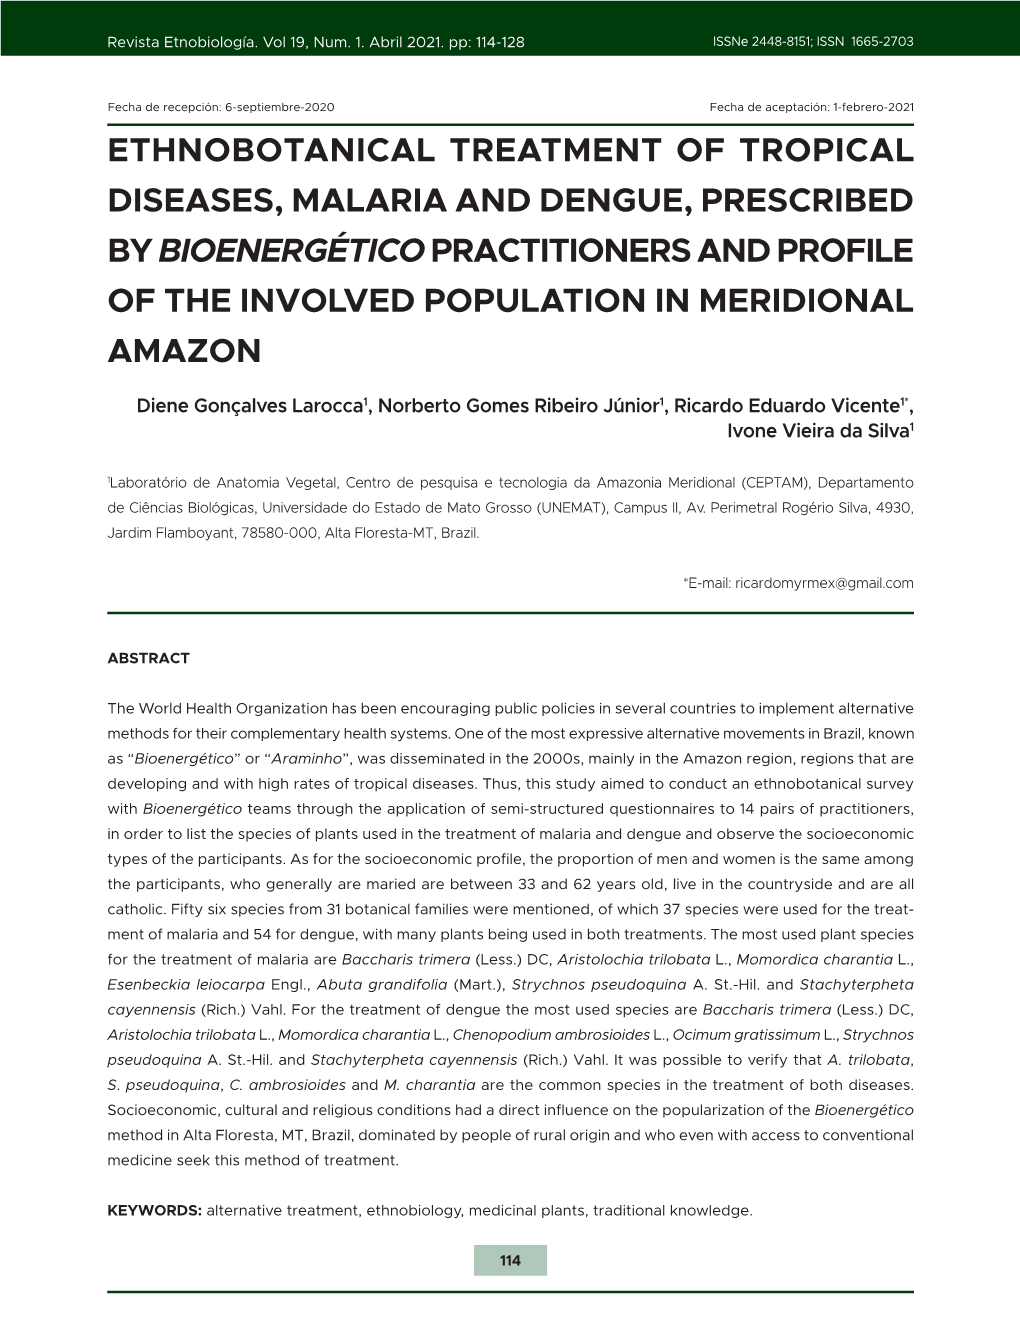 Ethnobotanical Treatment of Tropical Diseases, Malaria